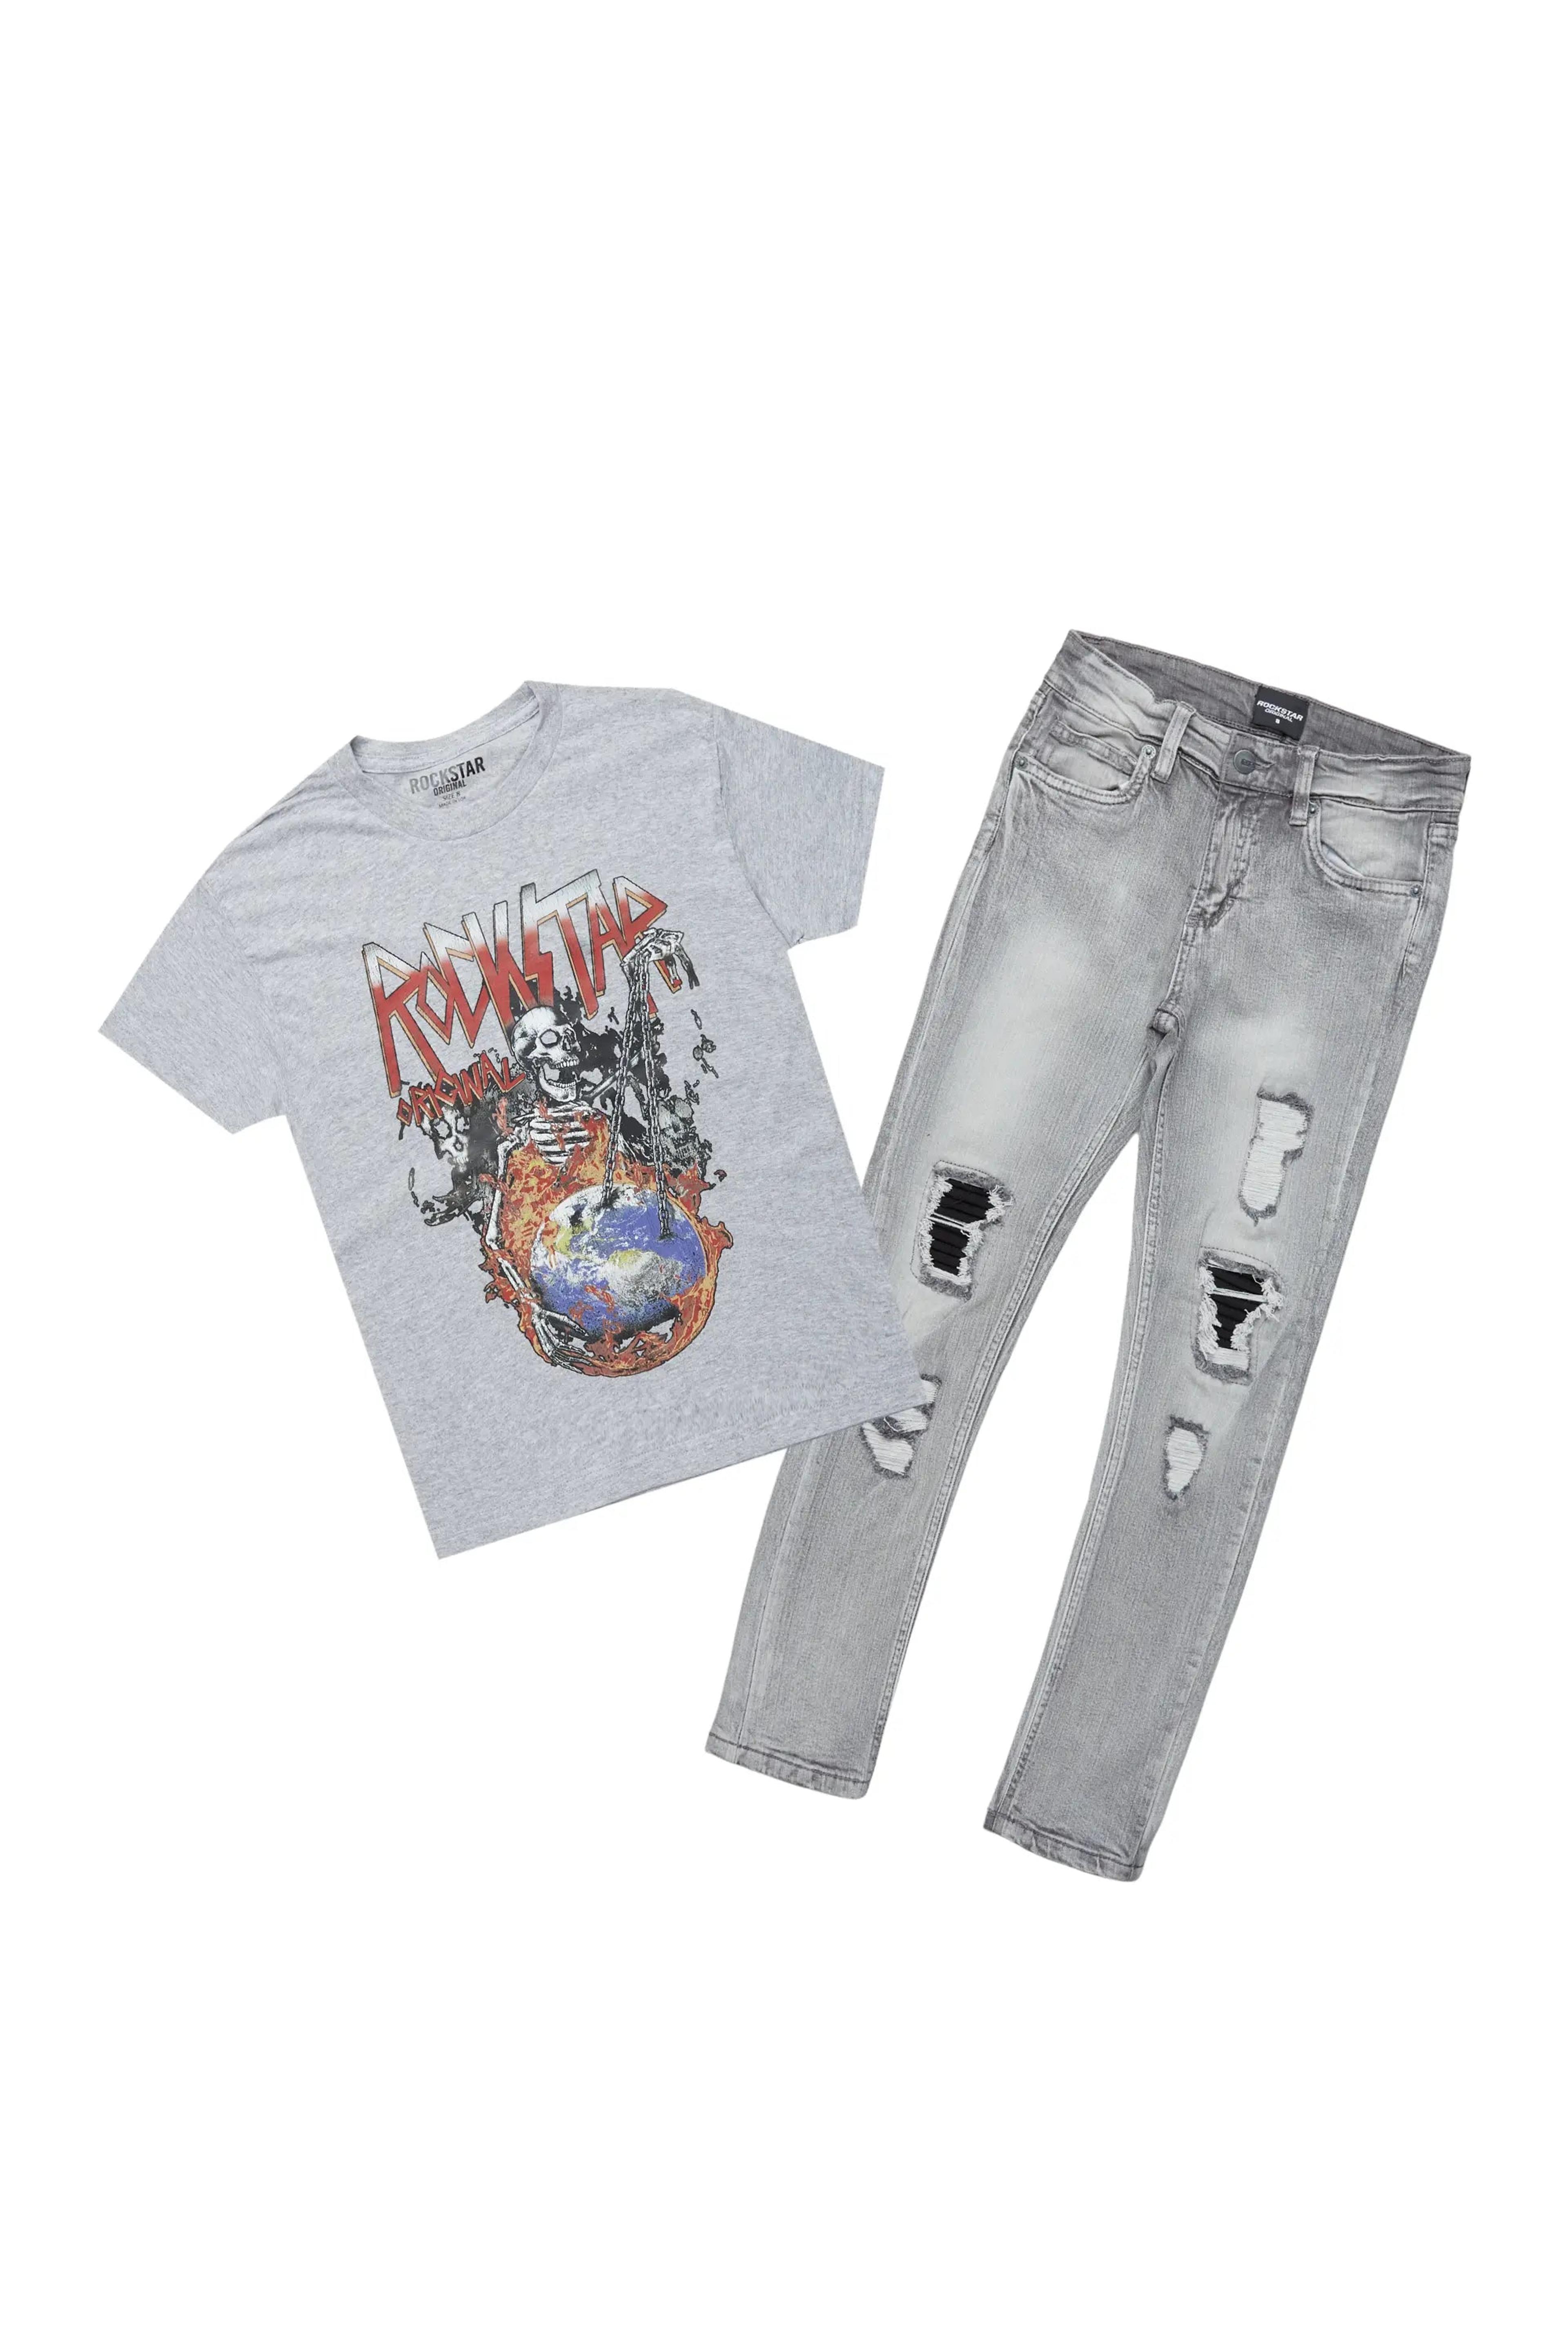 Alternate View 1 of Boys Cachi Grey T-Shirt/Skinny Jean Set